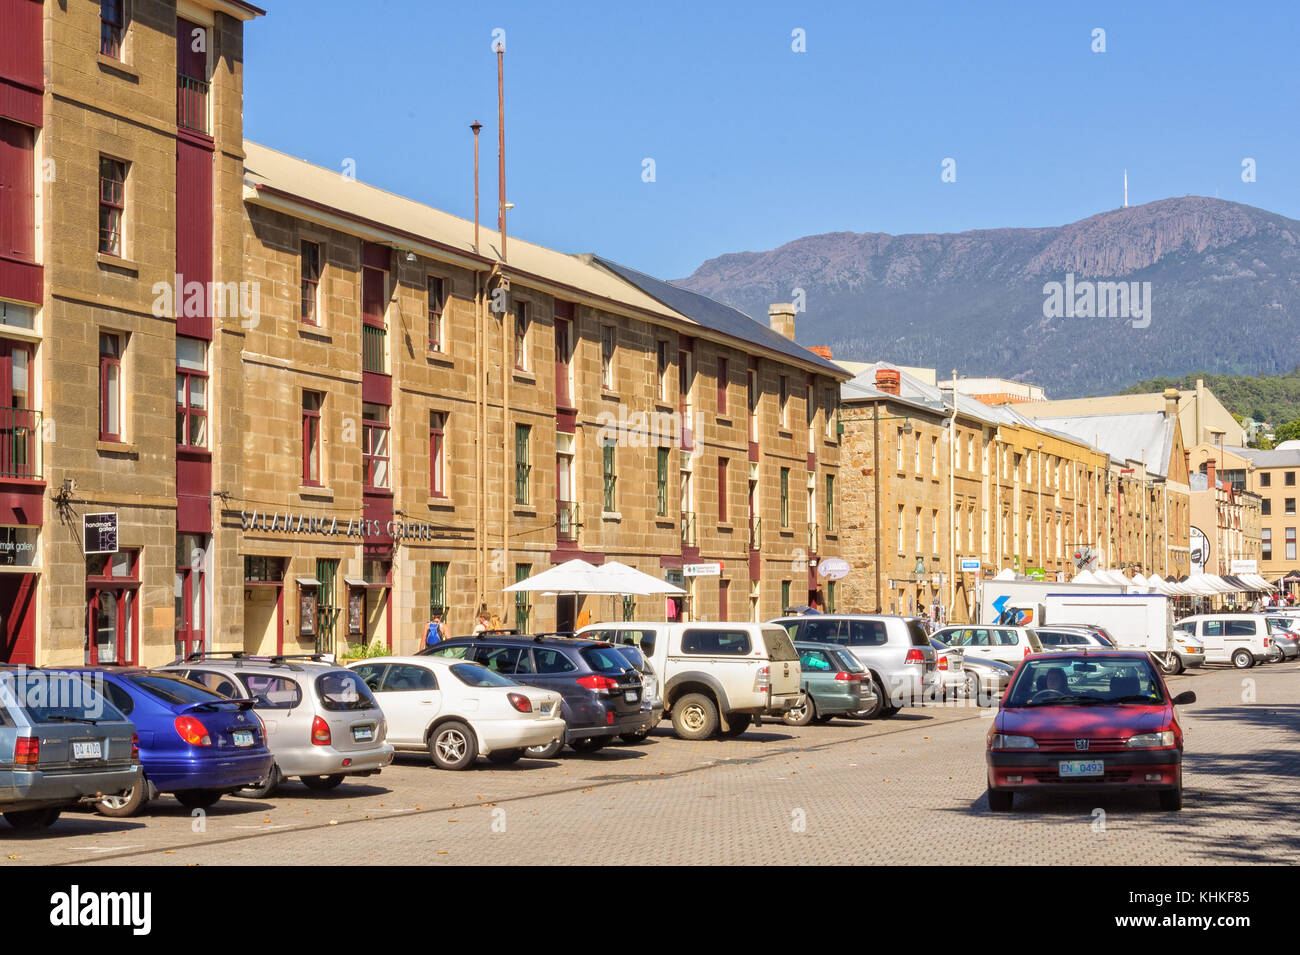 Sandstone buildings of Salamanca Place with Mount Wellington in the background - Hobart, Tasmania, Australia Stock Photo